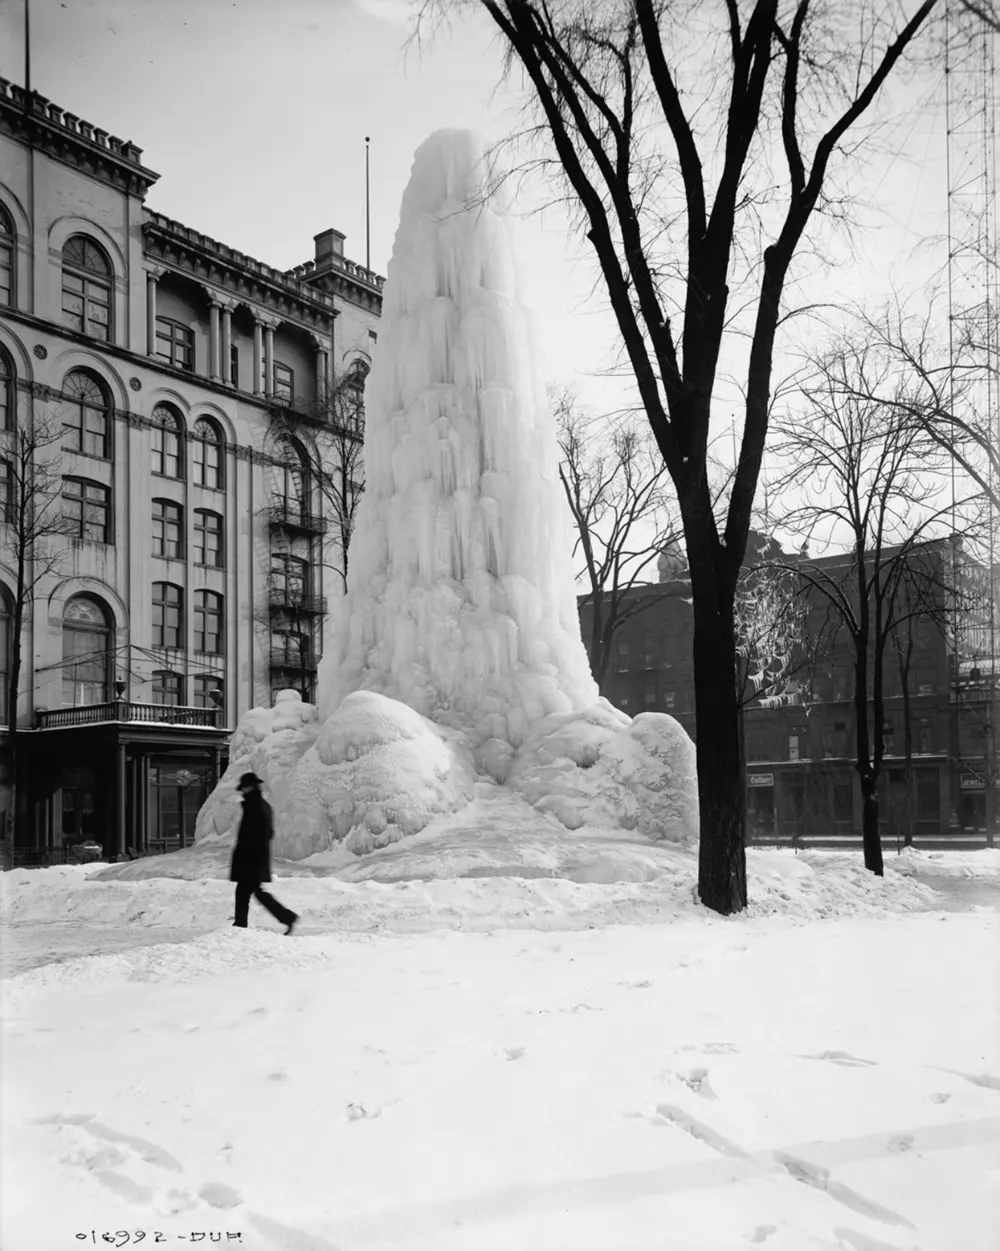 Detroit ice fountain photos